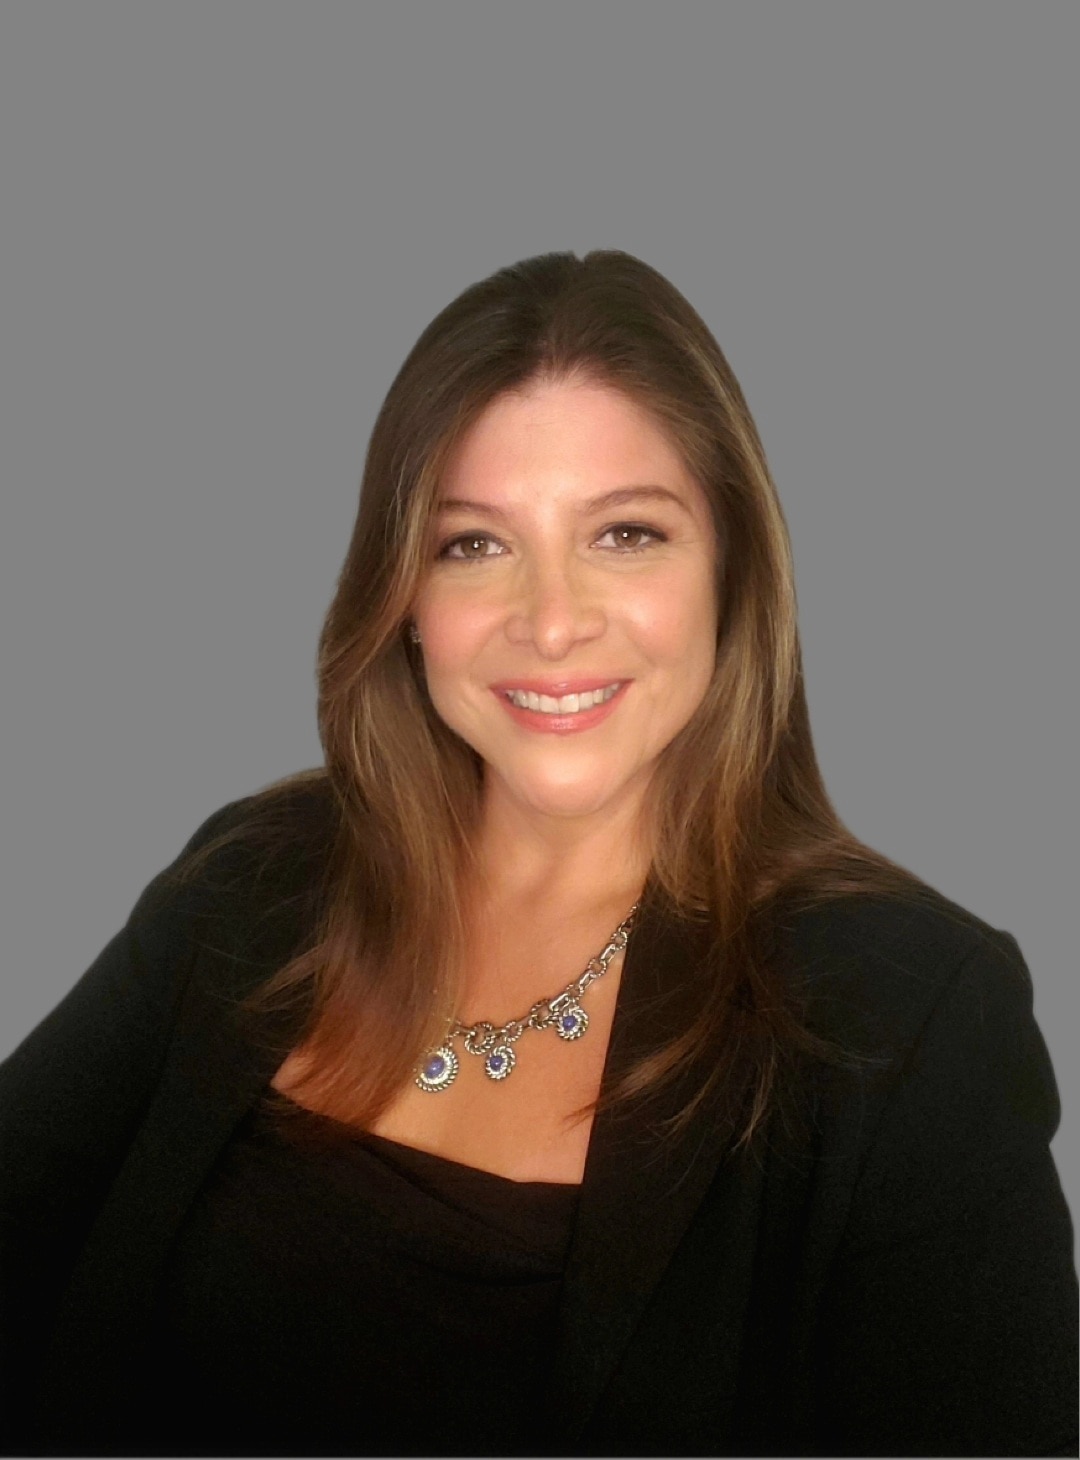 JANE MEDRANDA Financial Professional & Insurance Agent